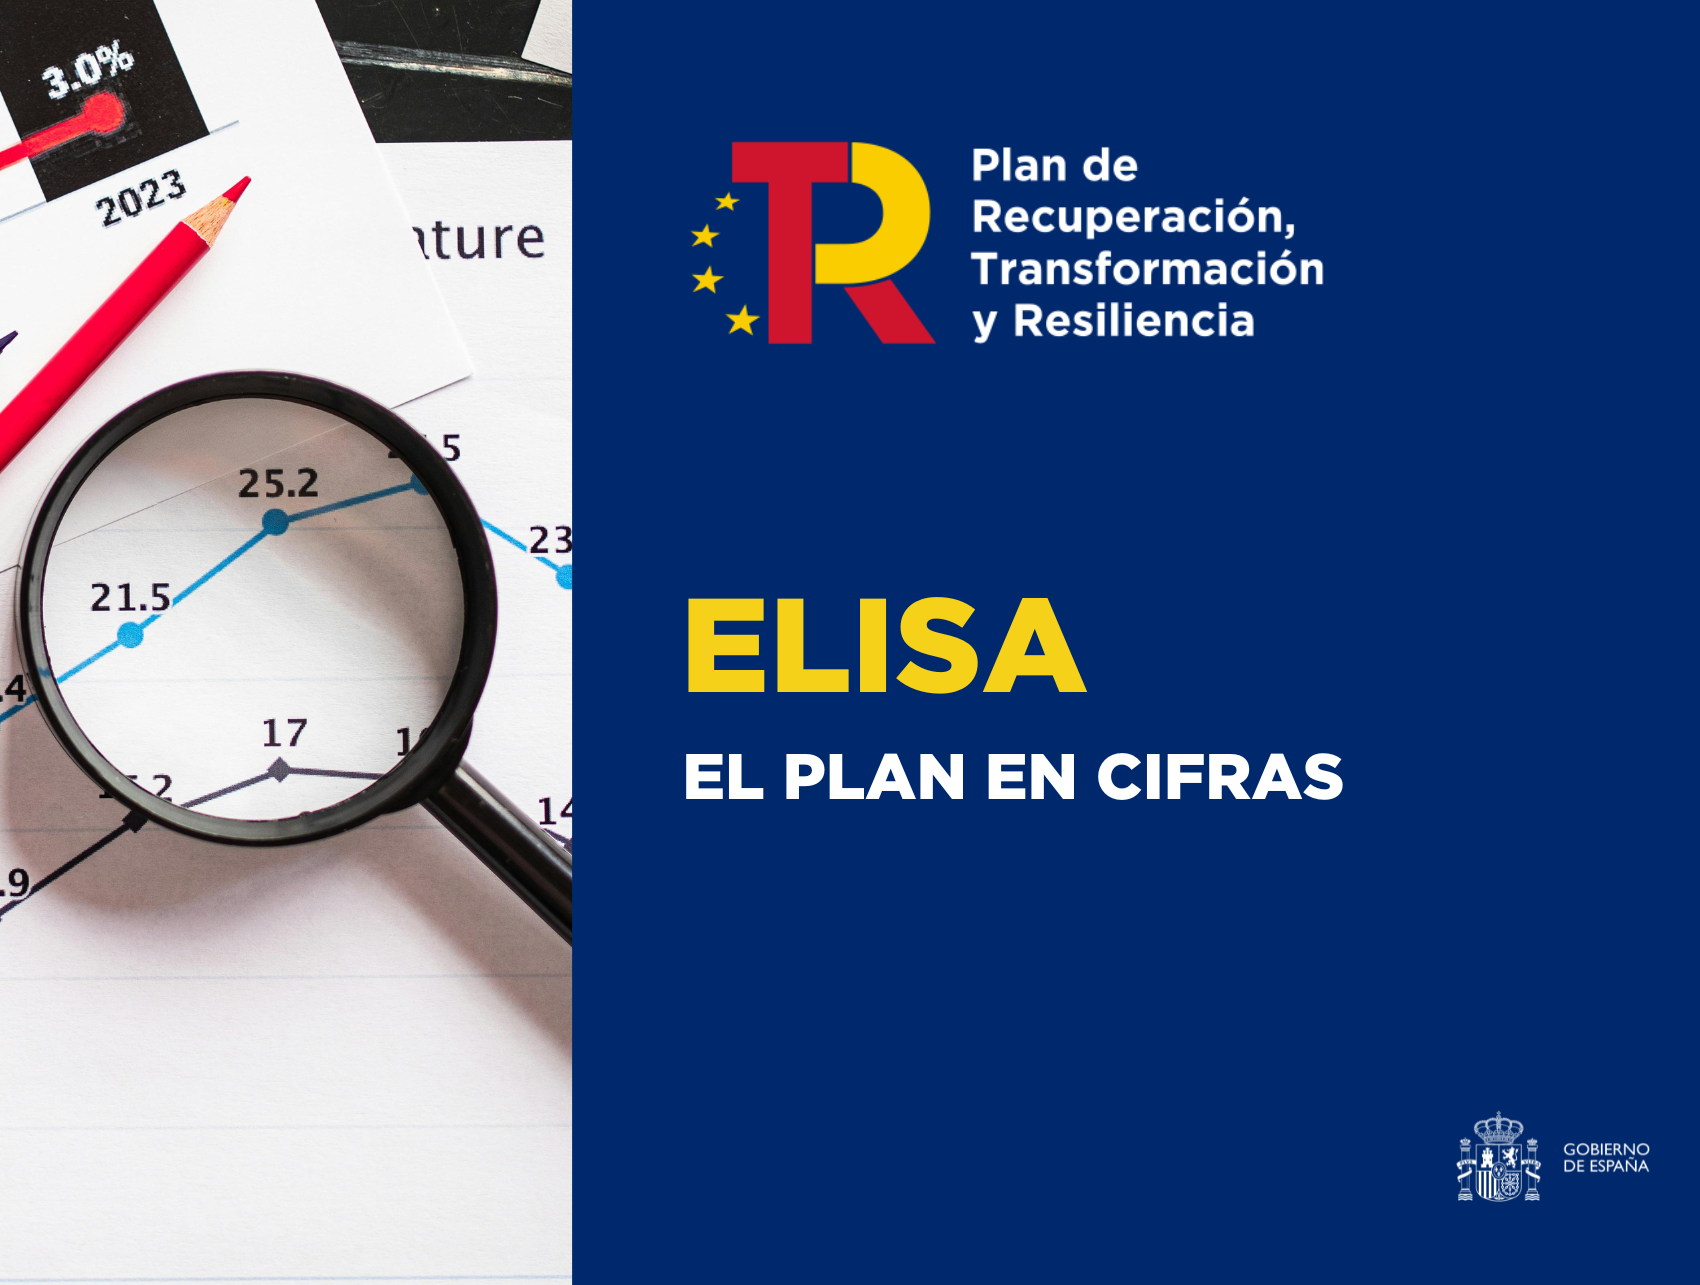 ELISA: El Plan PRTR en cifras